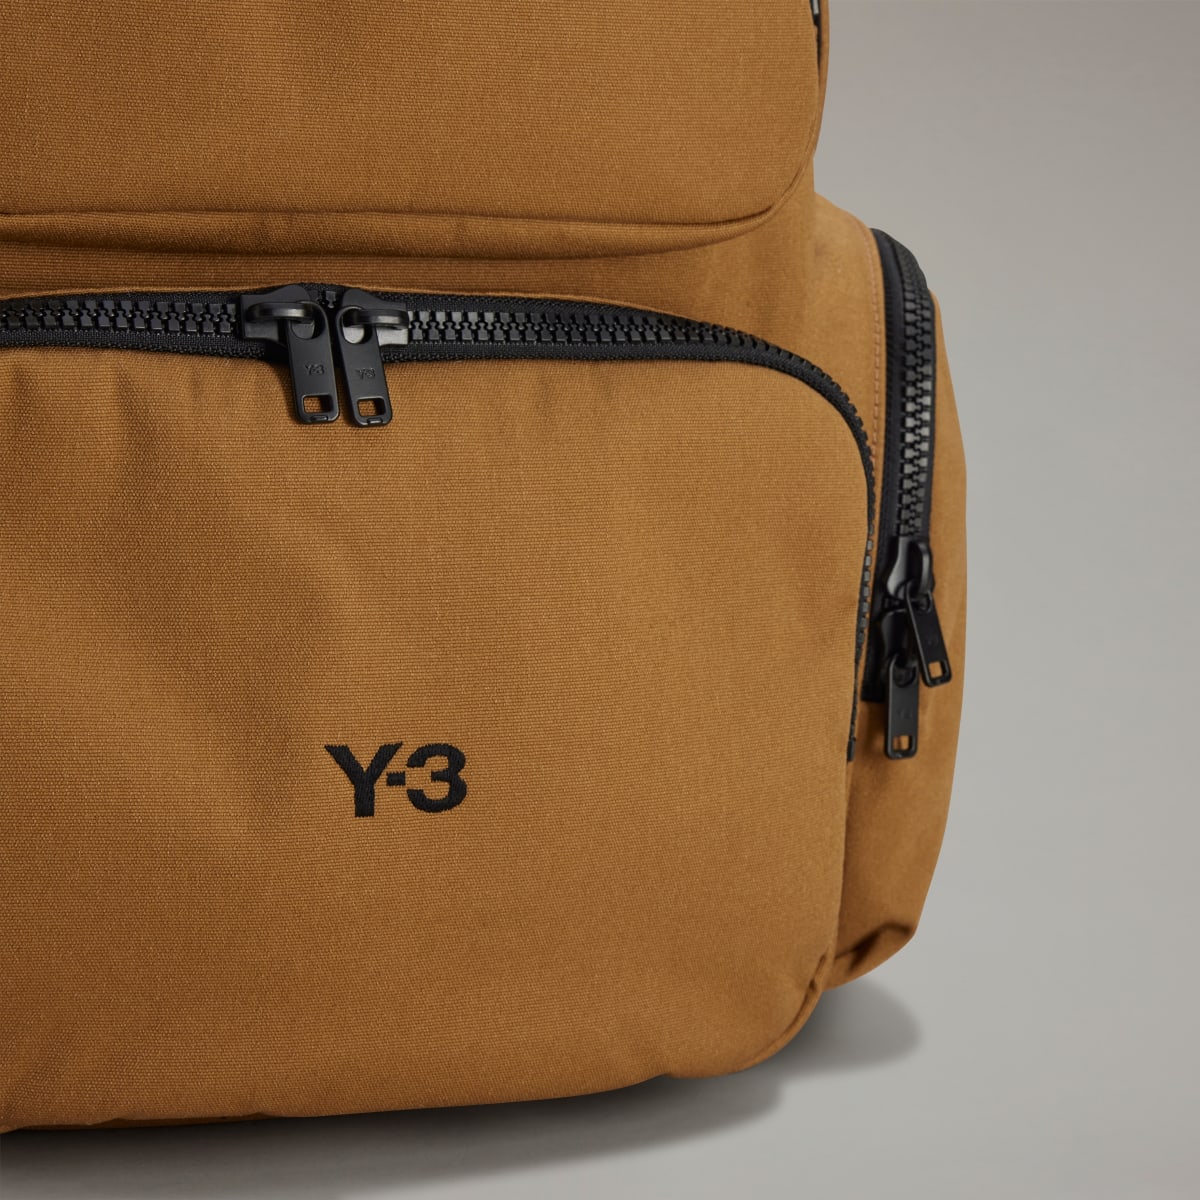 Adidas Y-3 Backpack. 6